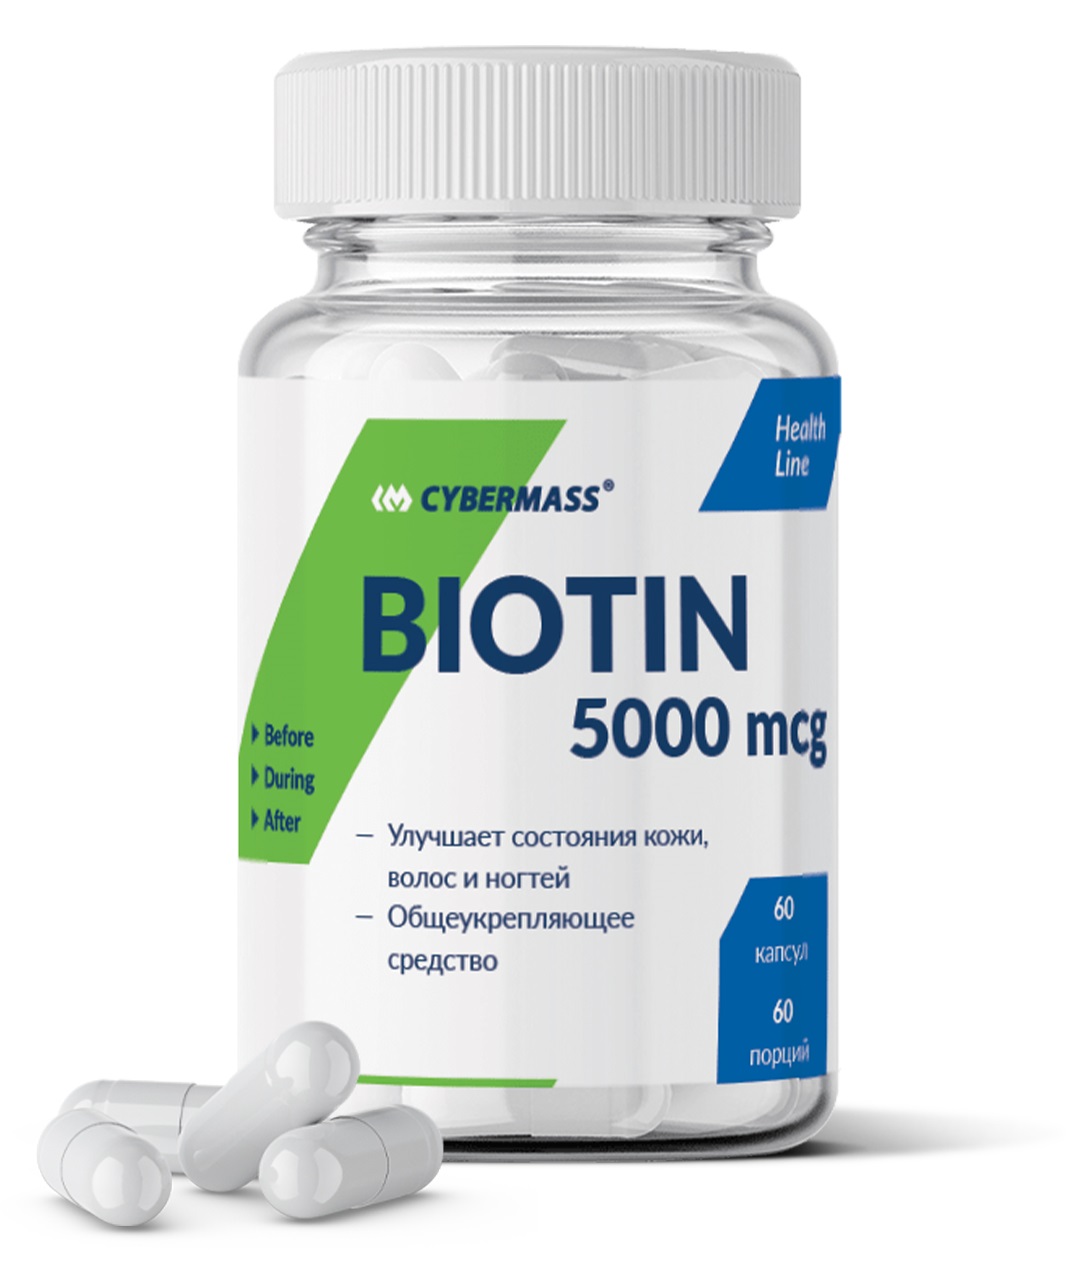 CyberMass Пищевая добавка Biotin 5000 мкг, 60 капсул (CyberMass, Health line)